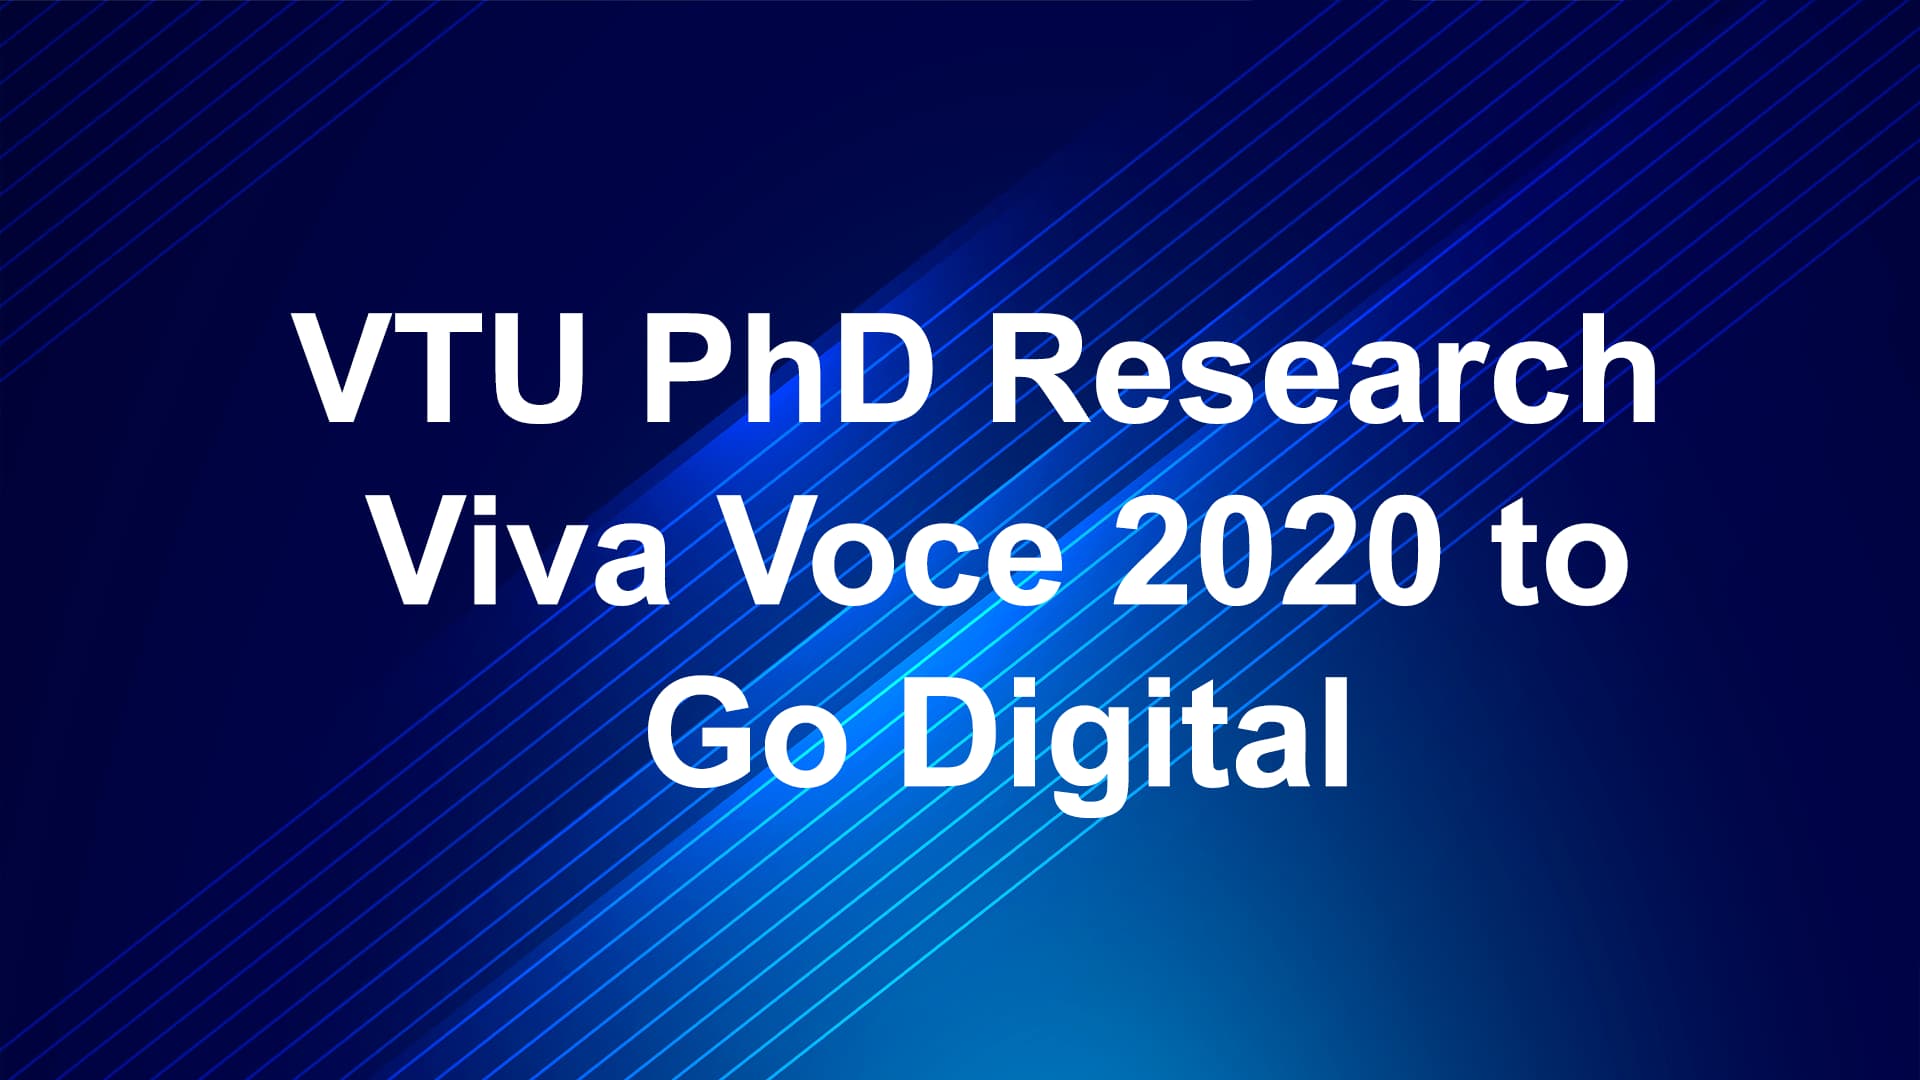 VTU PhD Research Viva Voce 2020 to Go Digital